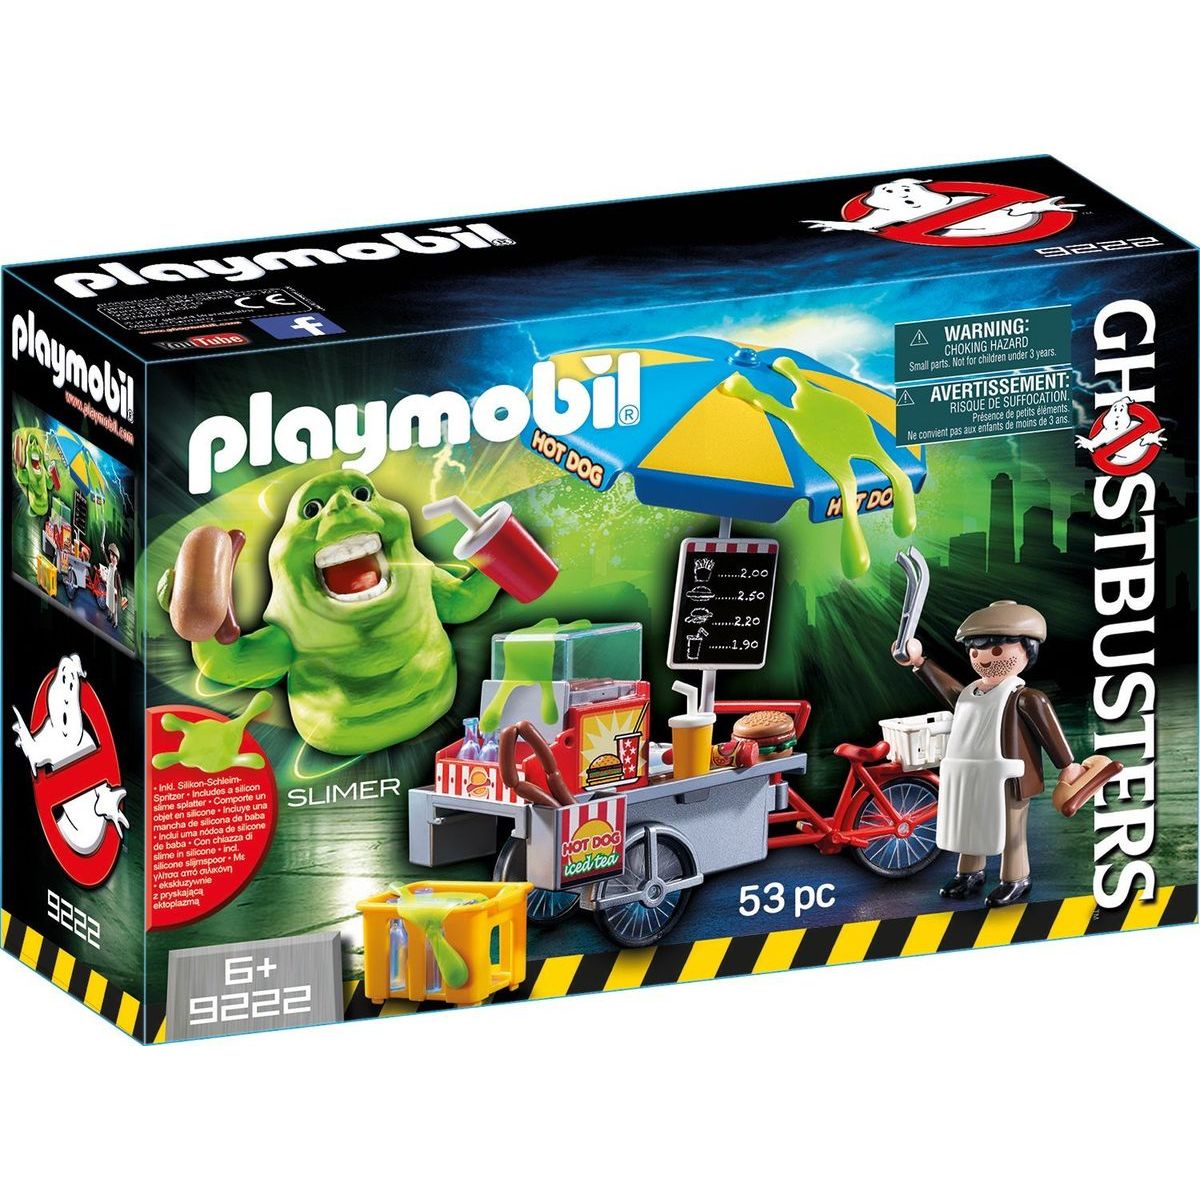 Playmobil 9222 Ghostbusters Slimer u stánku s hotdogy